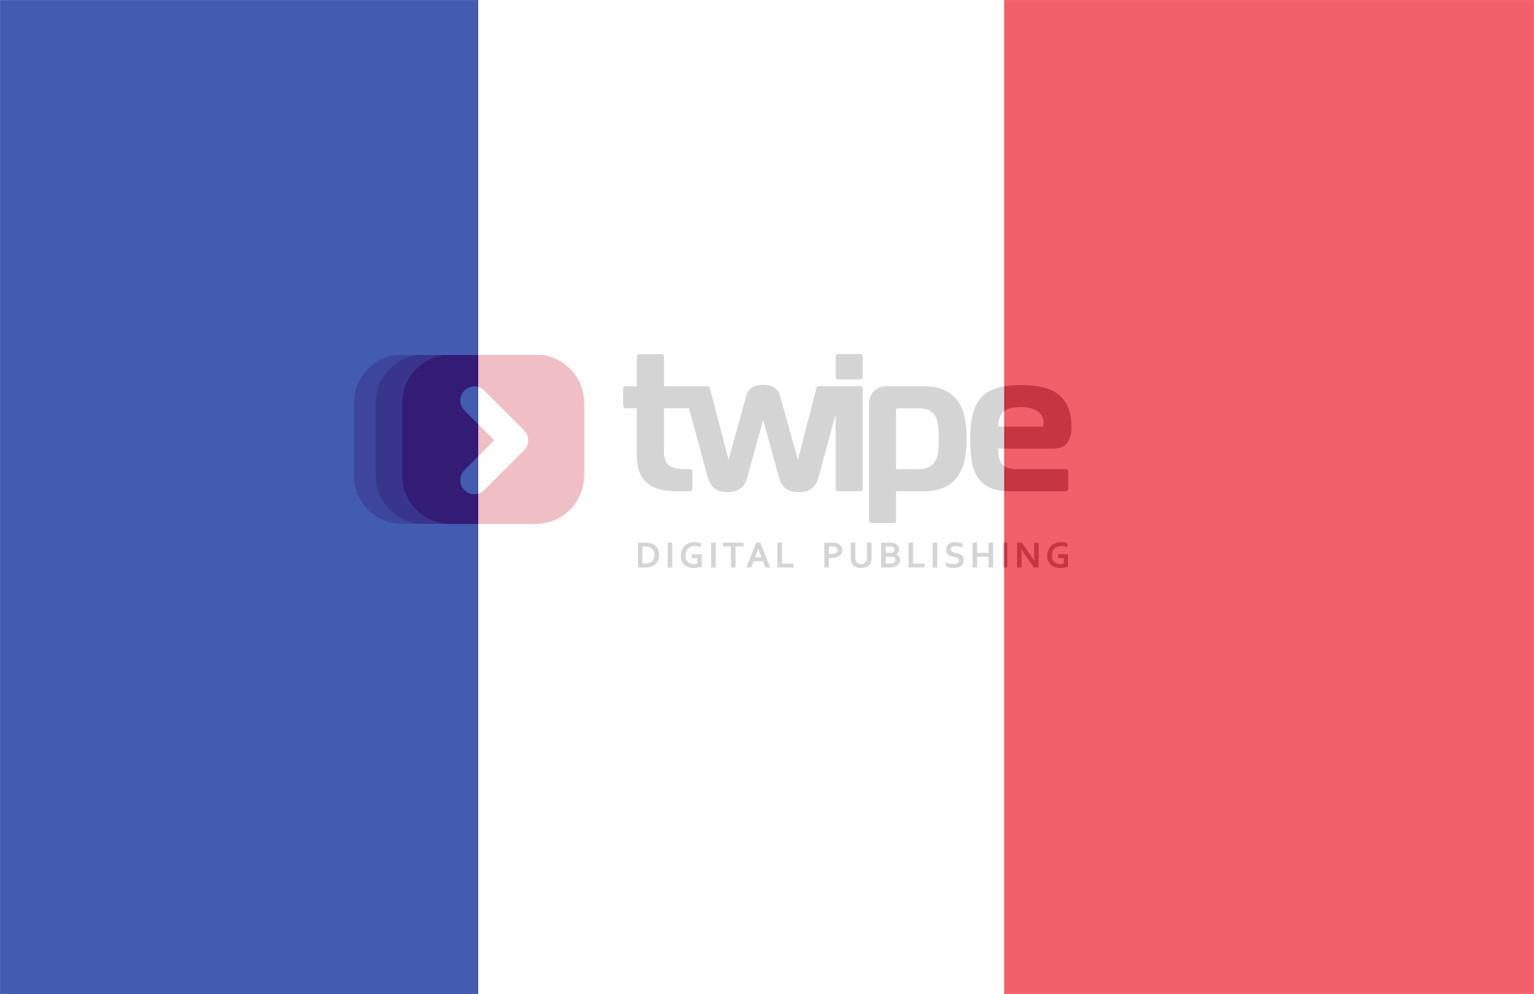 Pray for Paris - Twipe logo 2